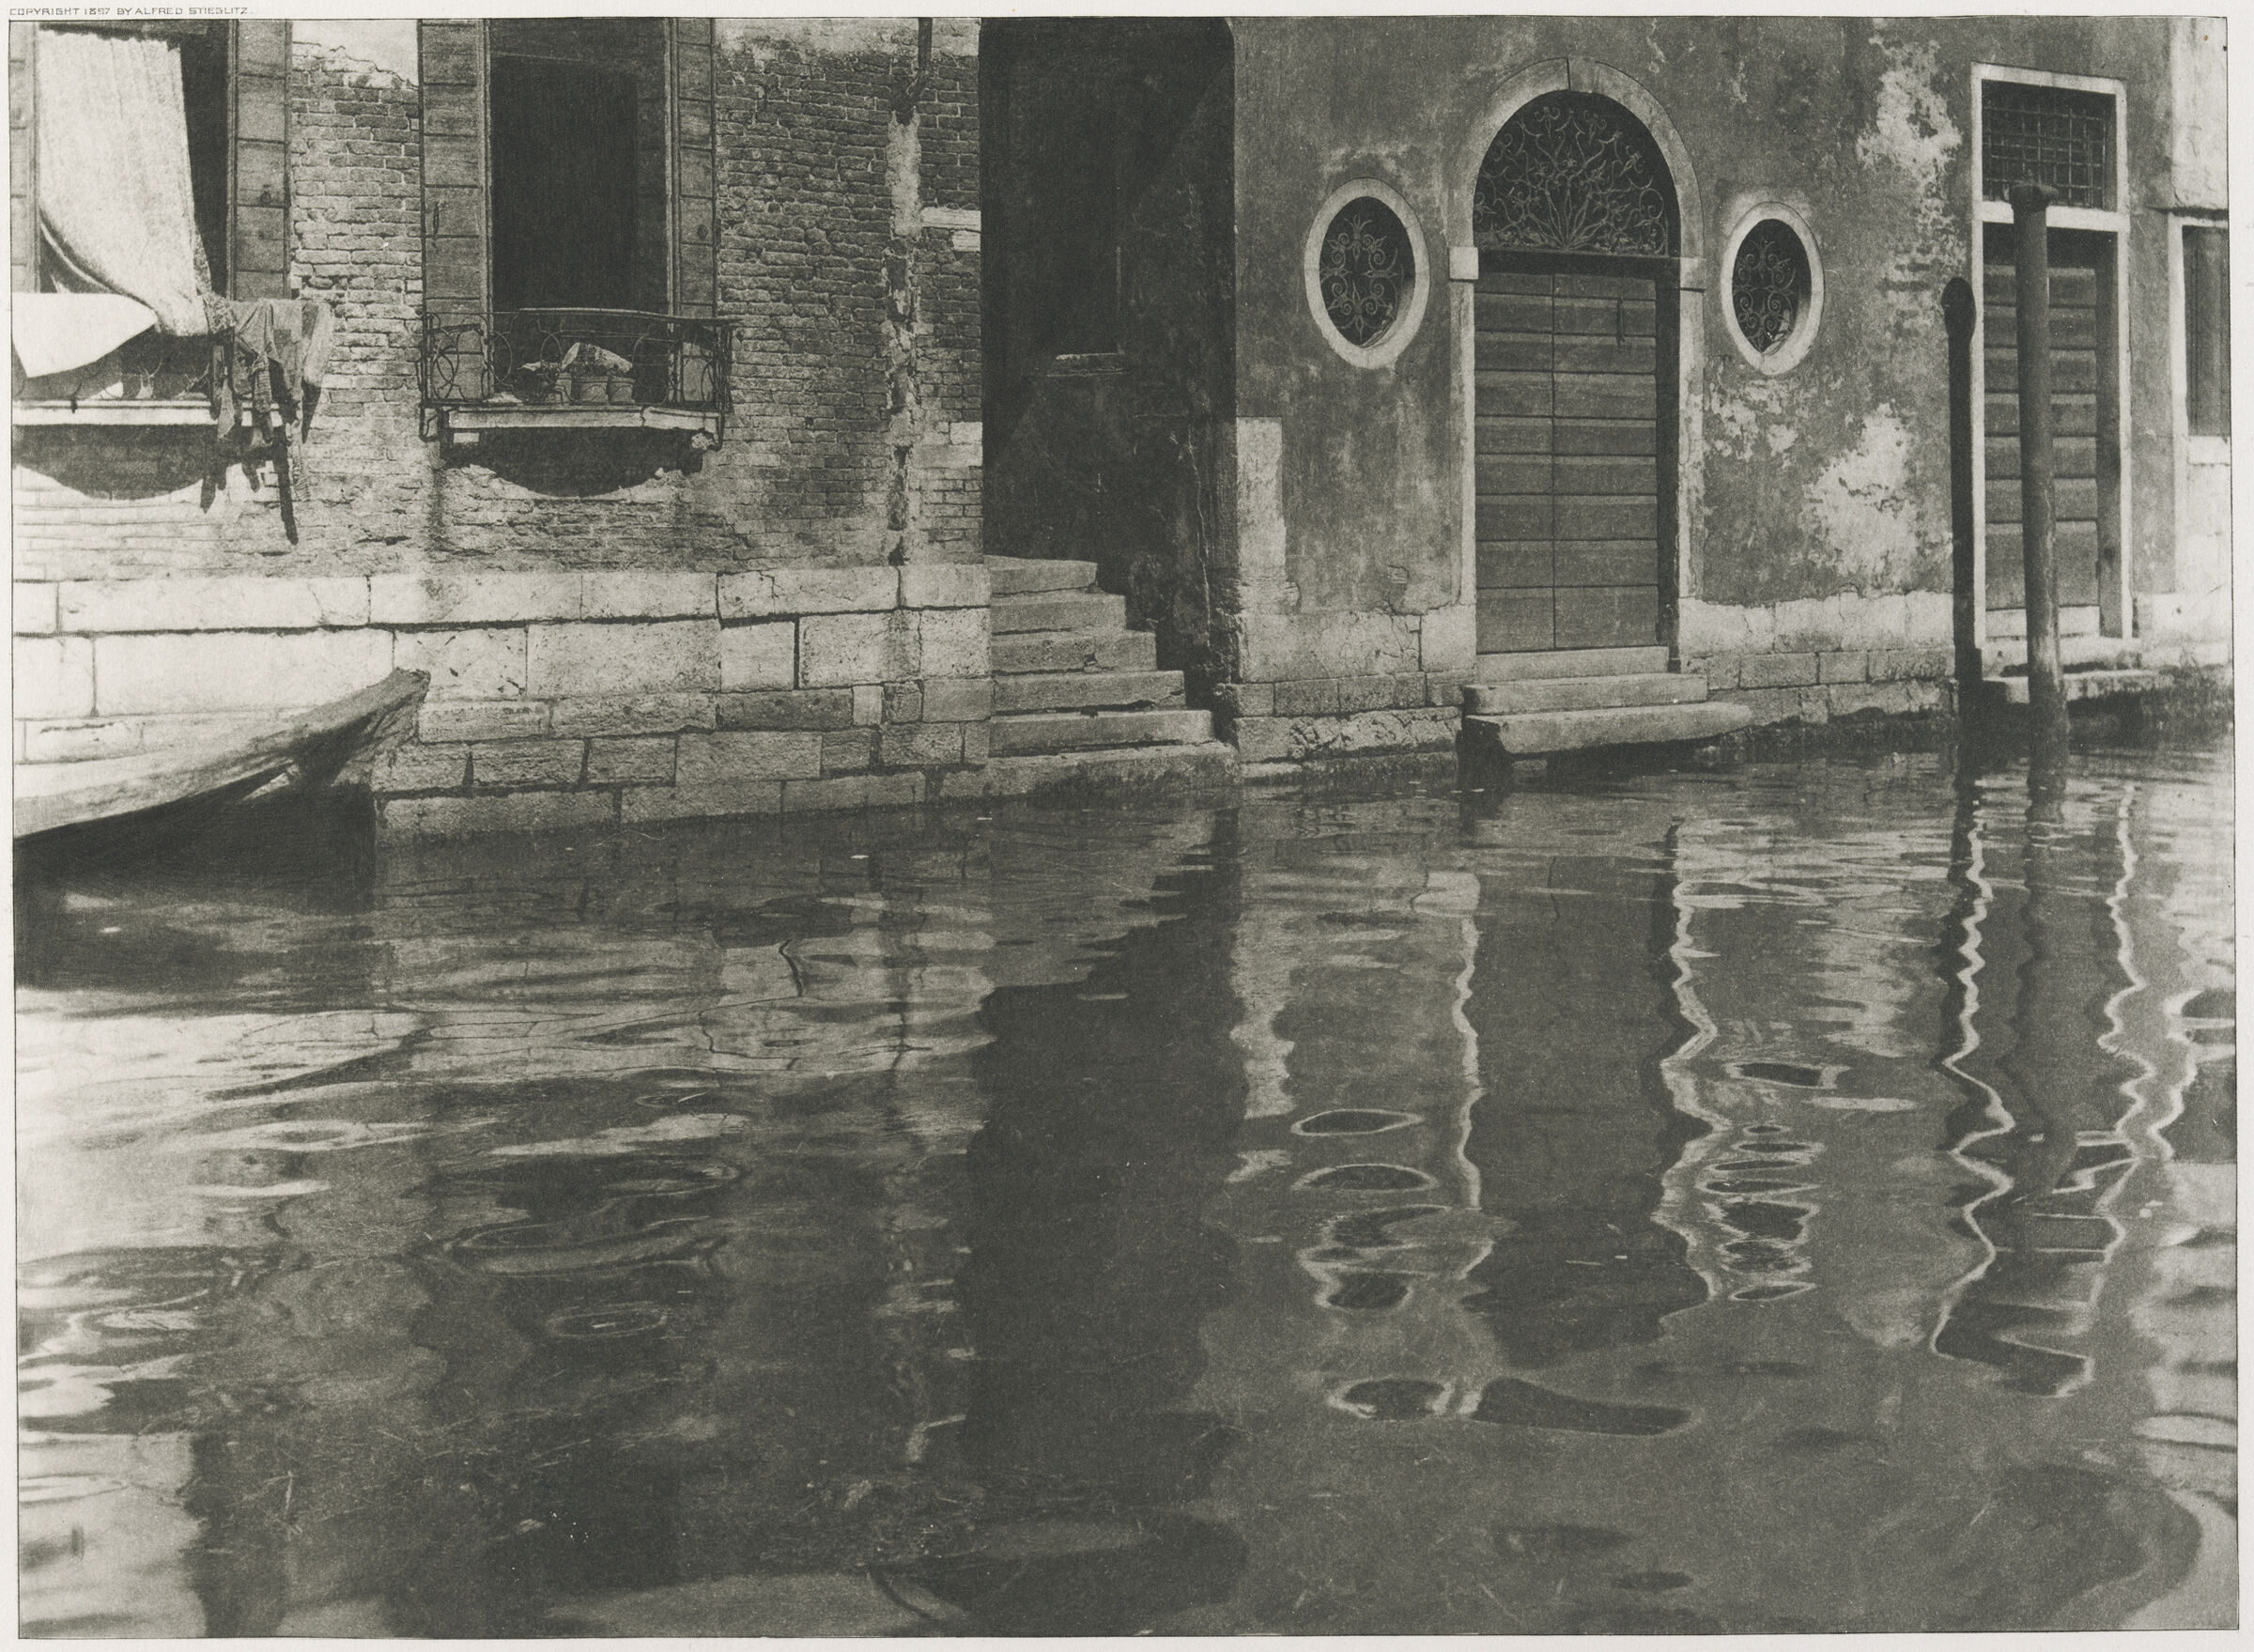 Reflections - Venice